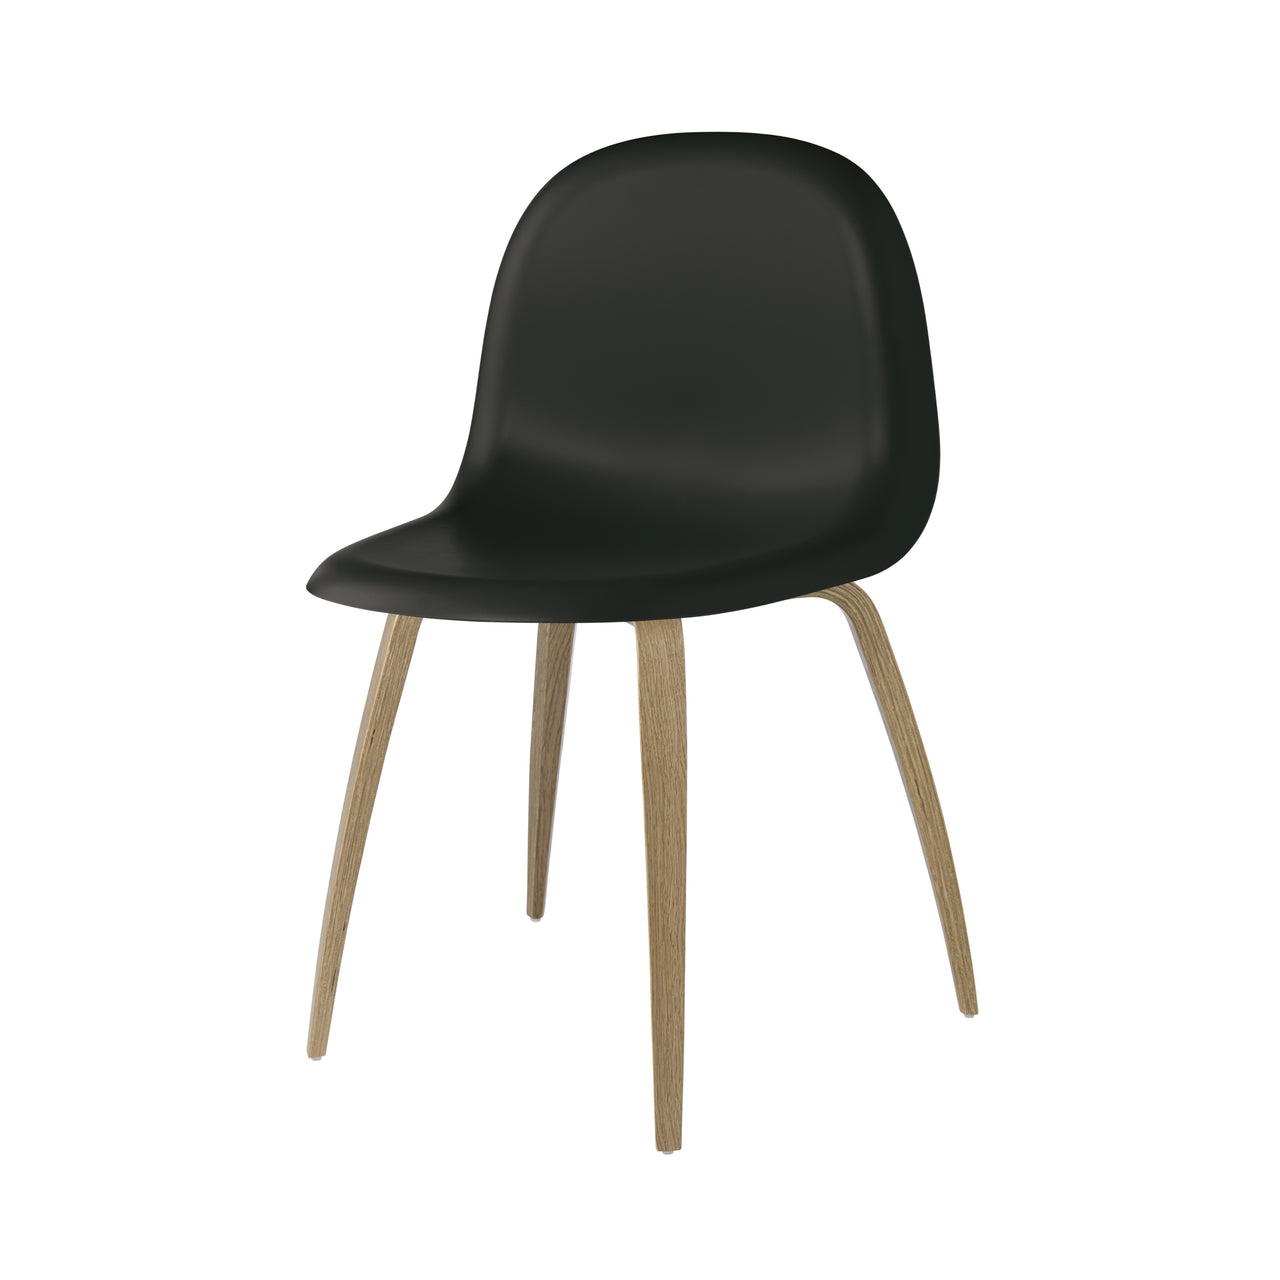 3D Dining Chair: Wood Base + Plastic Shell + Oak + Plastic Glides